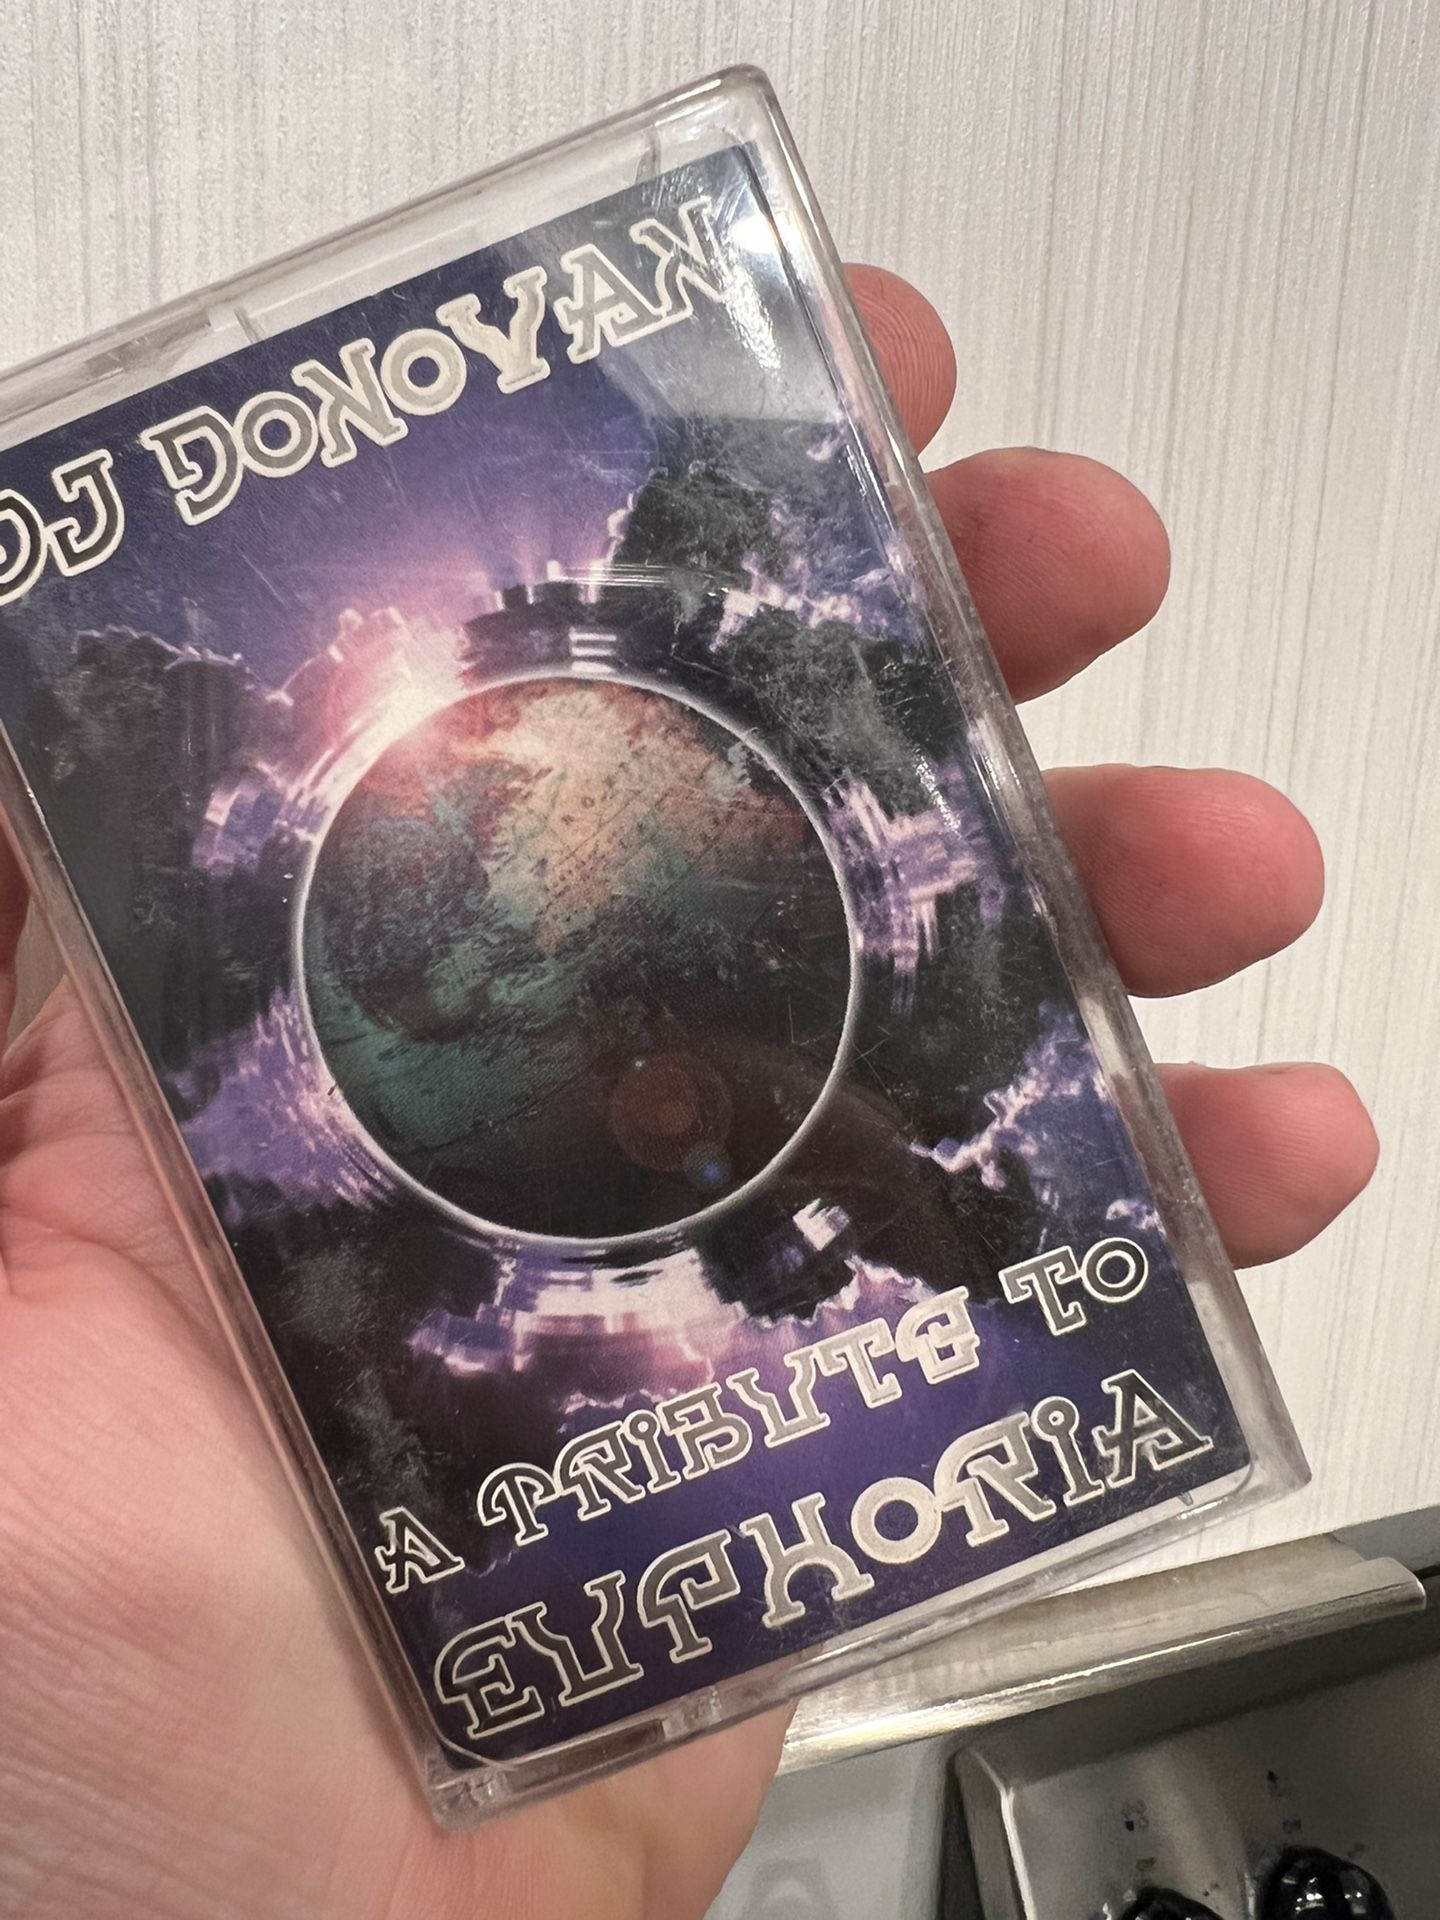 Dj Donovan. A Tribute To Euphoria. Mixtape 90s edm.